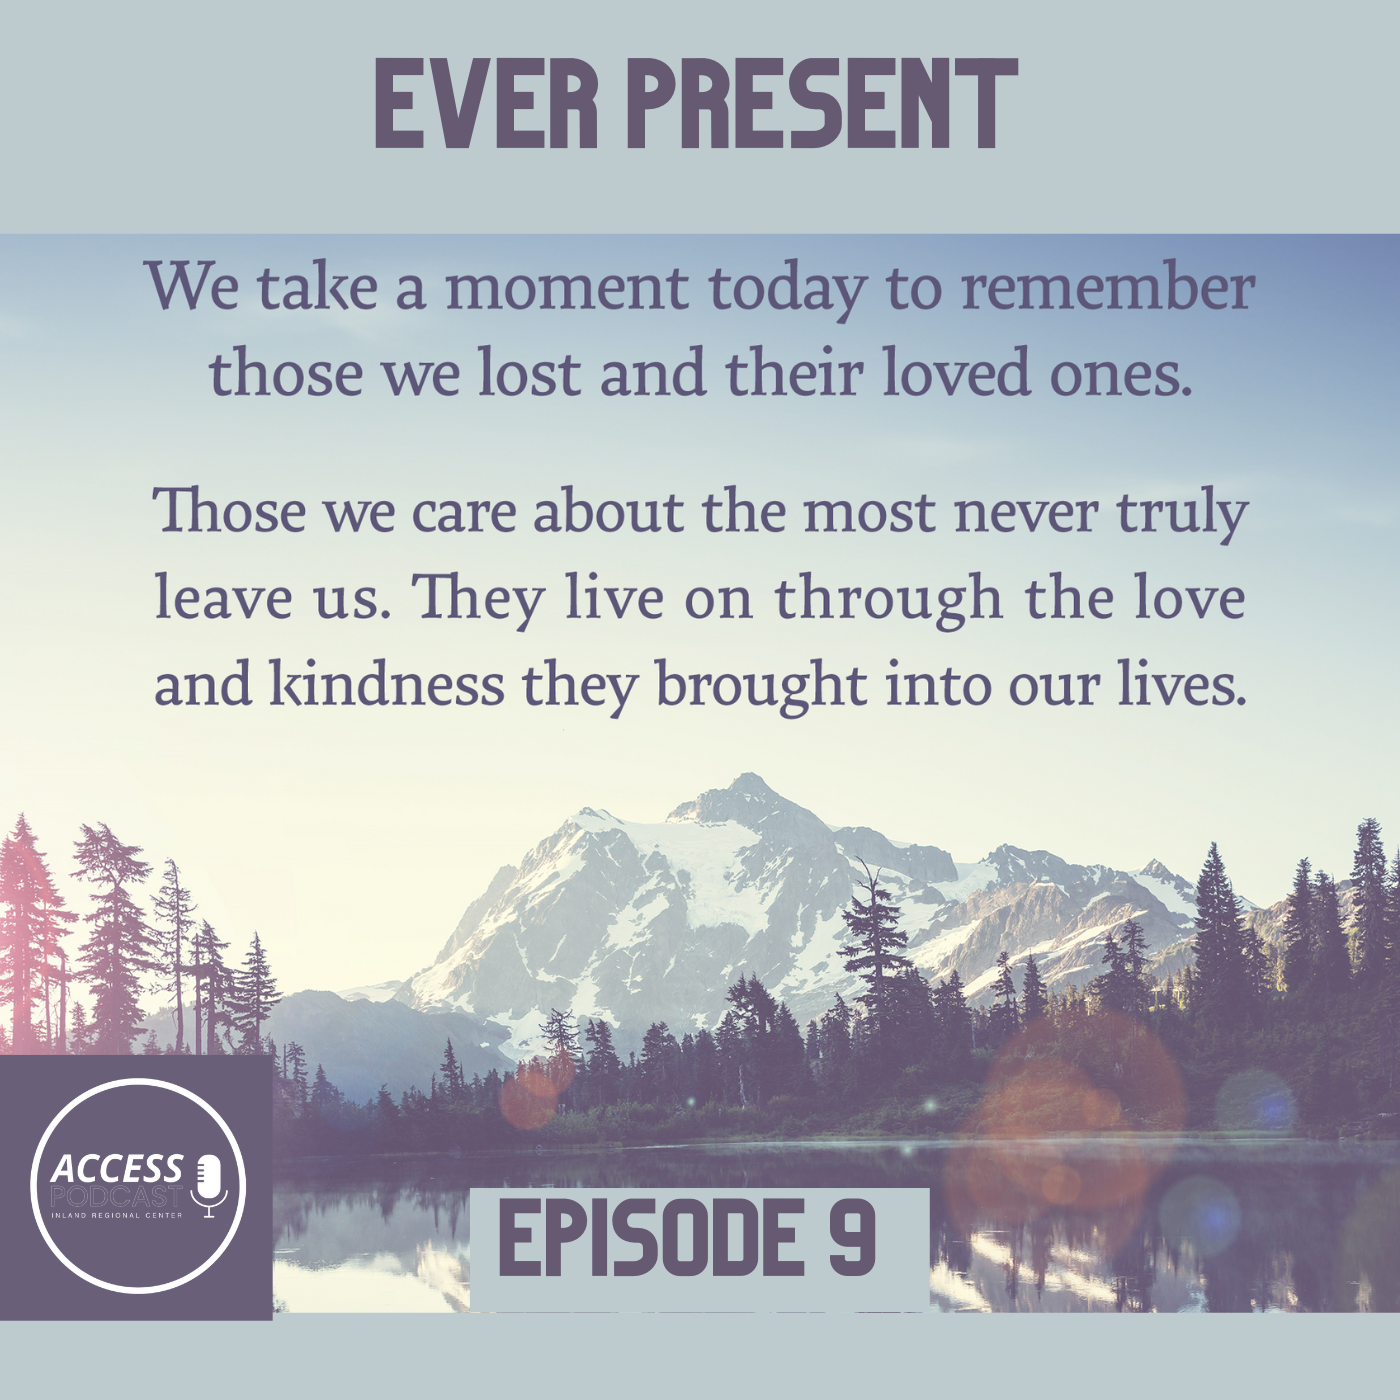 Episode 9 Memorial: ”Ever Present”